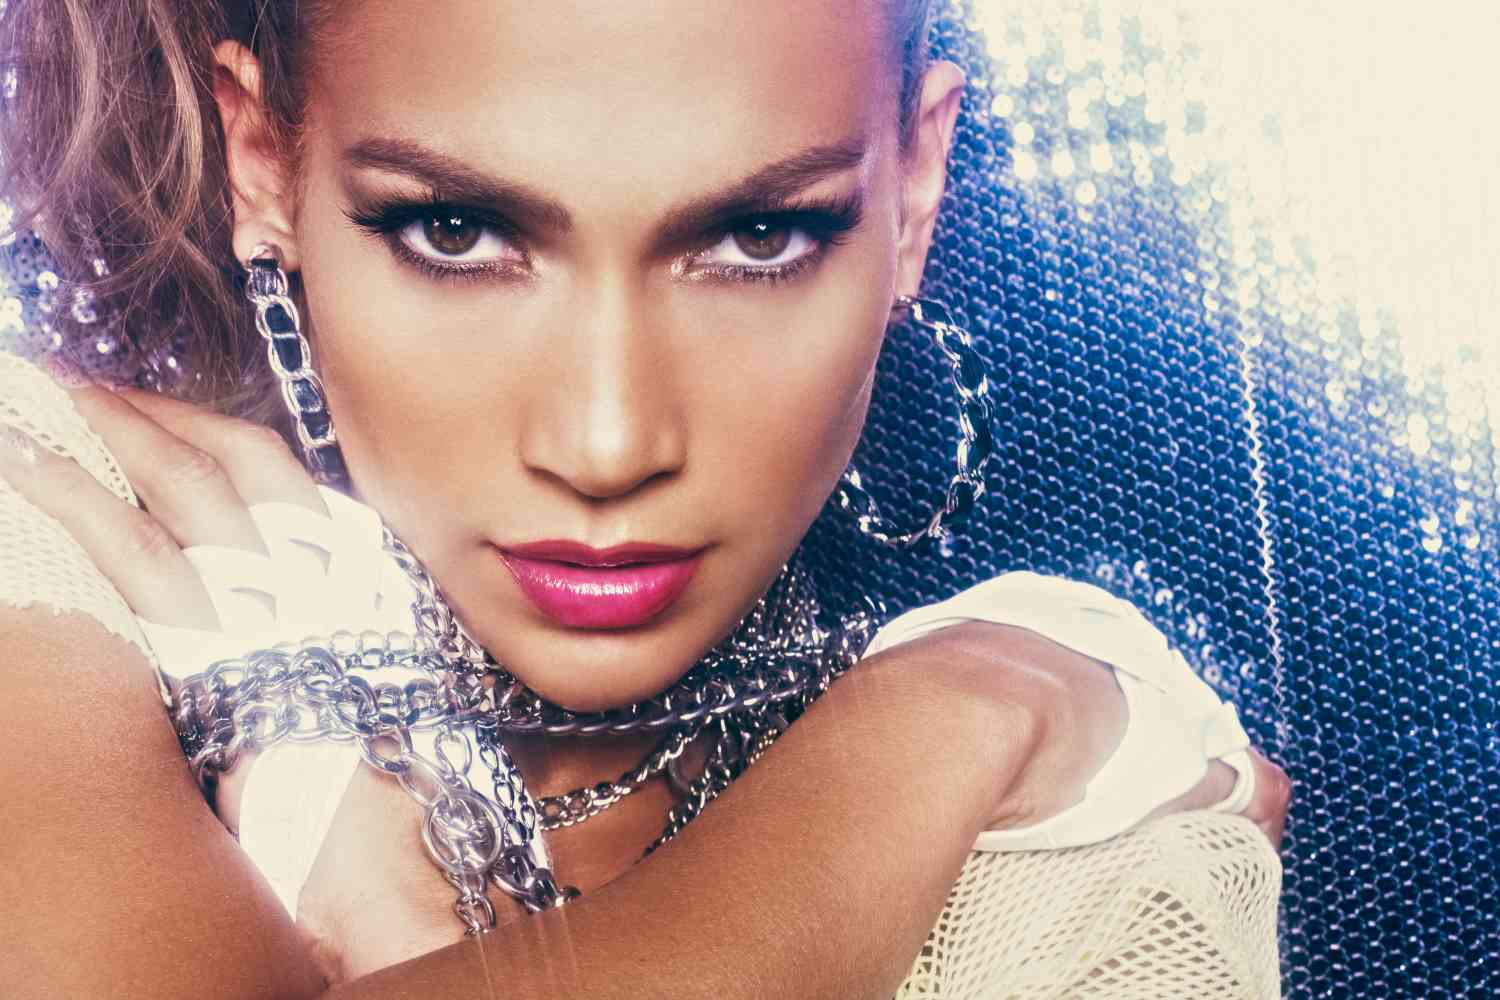 Iconic Image of Jennifer Lopez albums cover by Warwick Saint